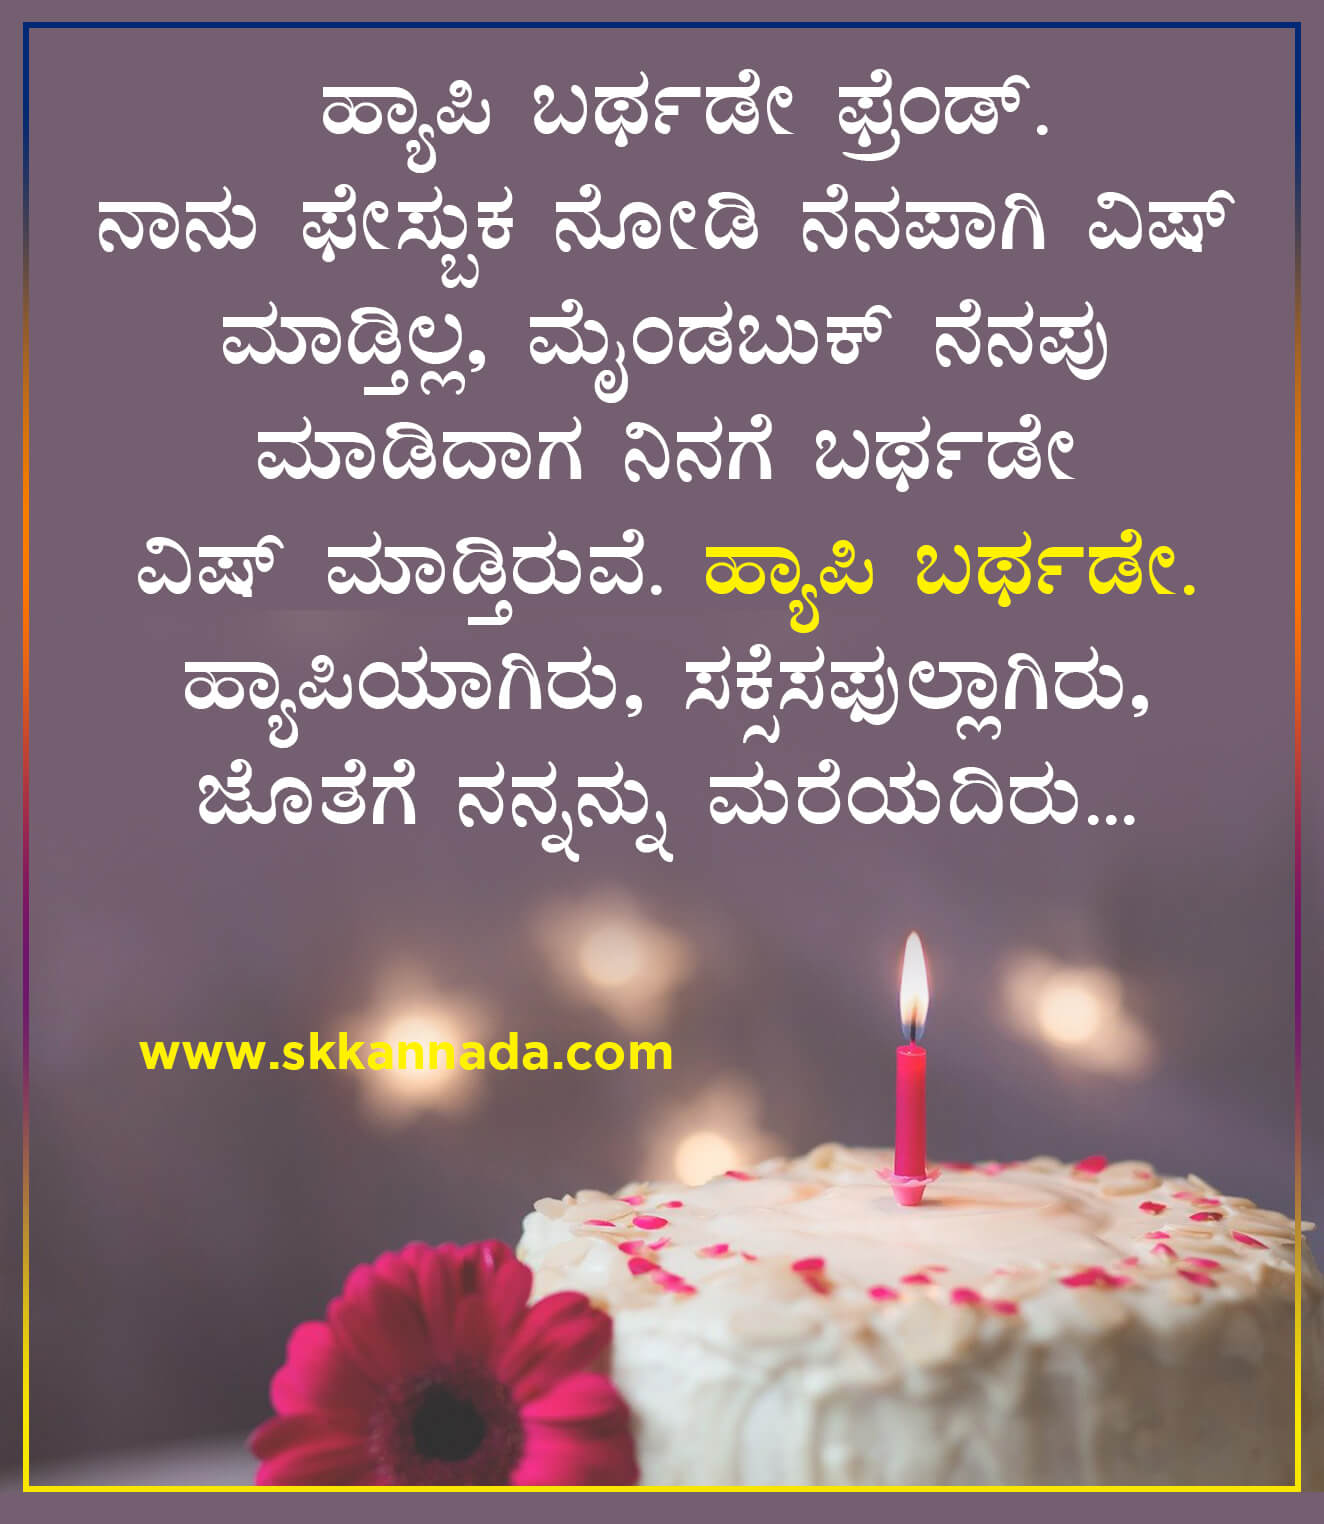 Happy Birthday Wishes in Kannada